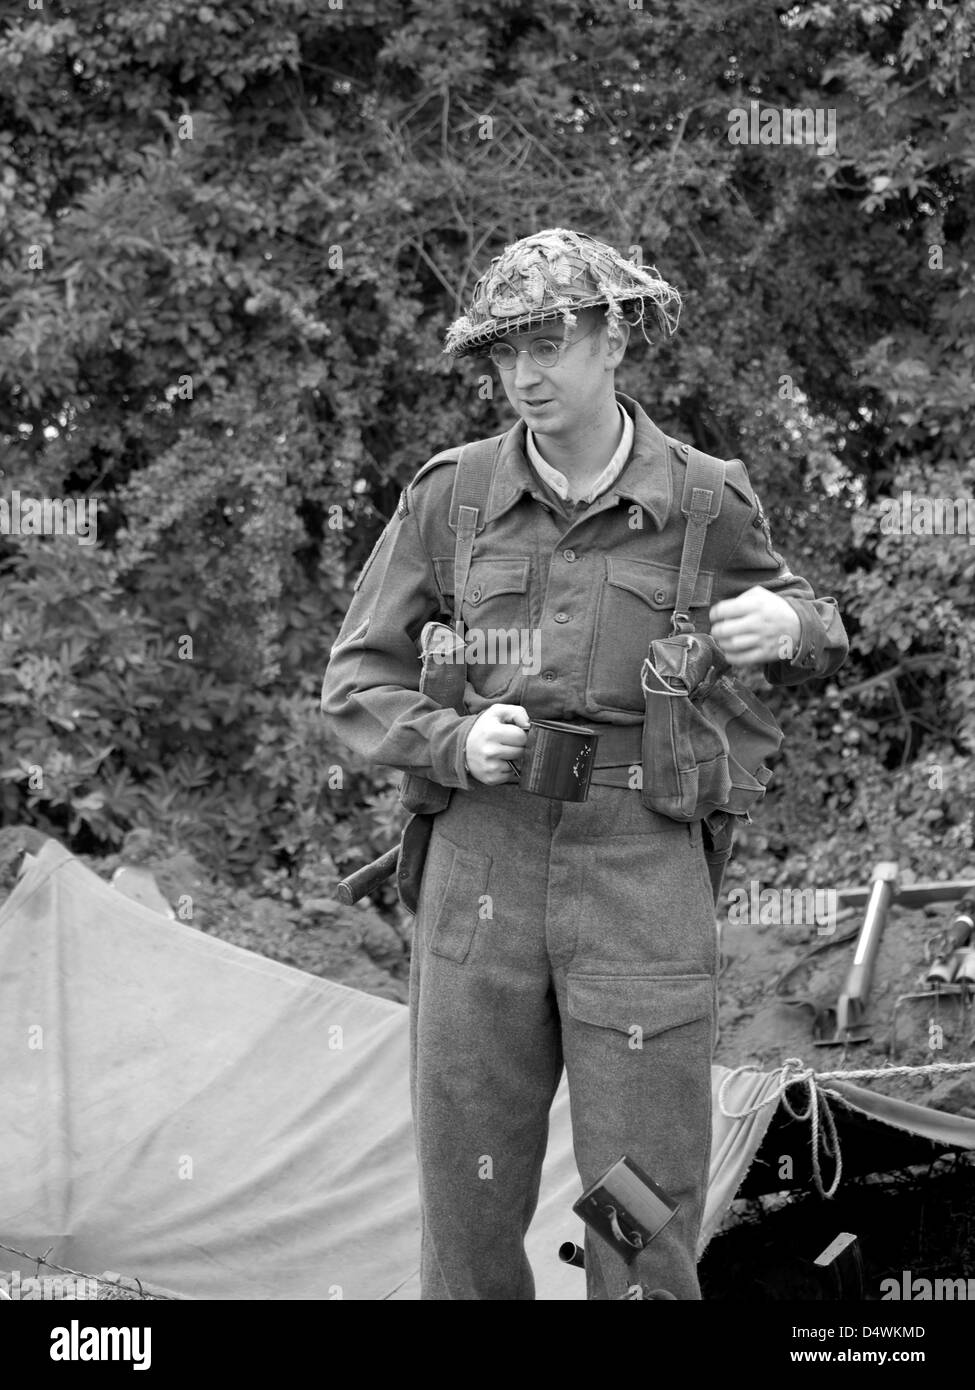 Reenactor portraying a World War II British soldier at Northampton & Lamport railways 1940's weekend Stock Photo